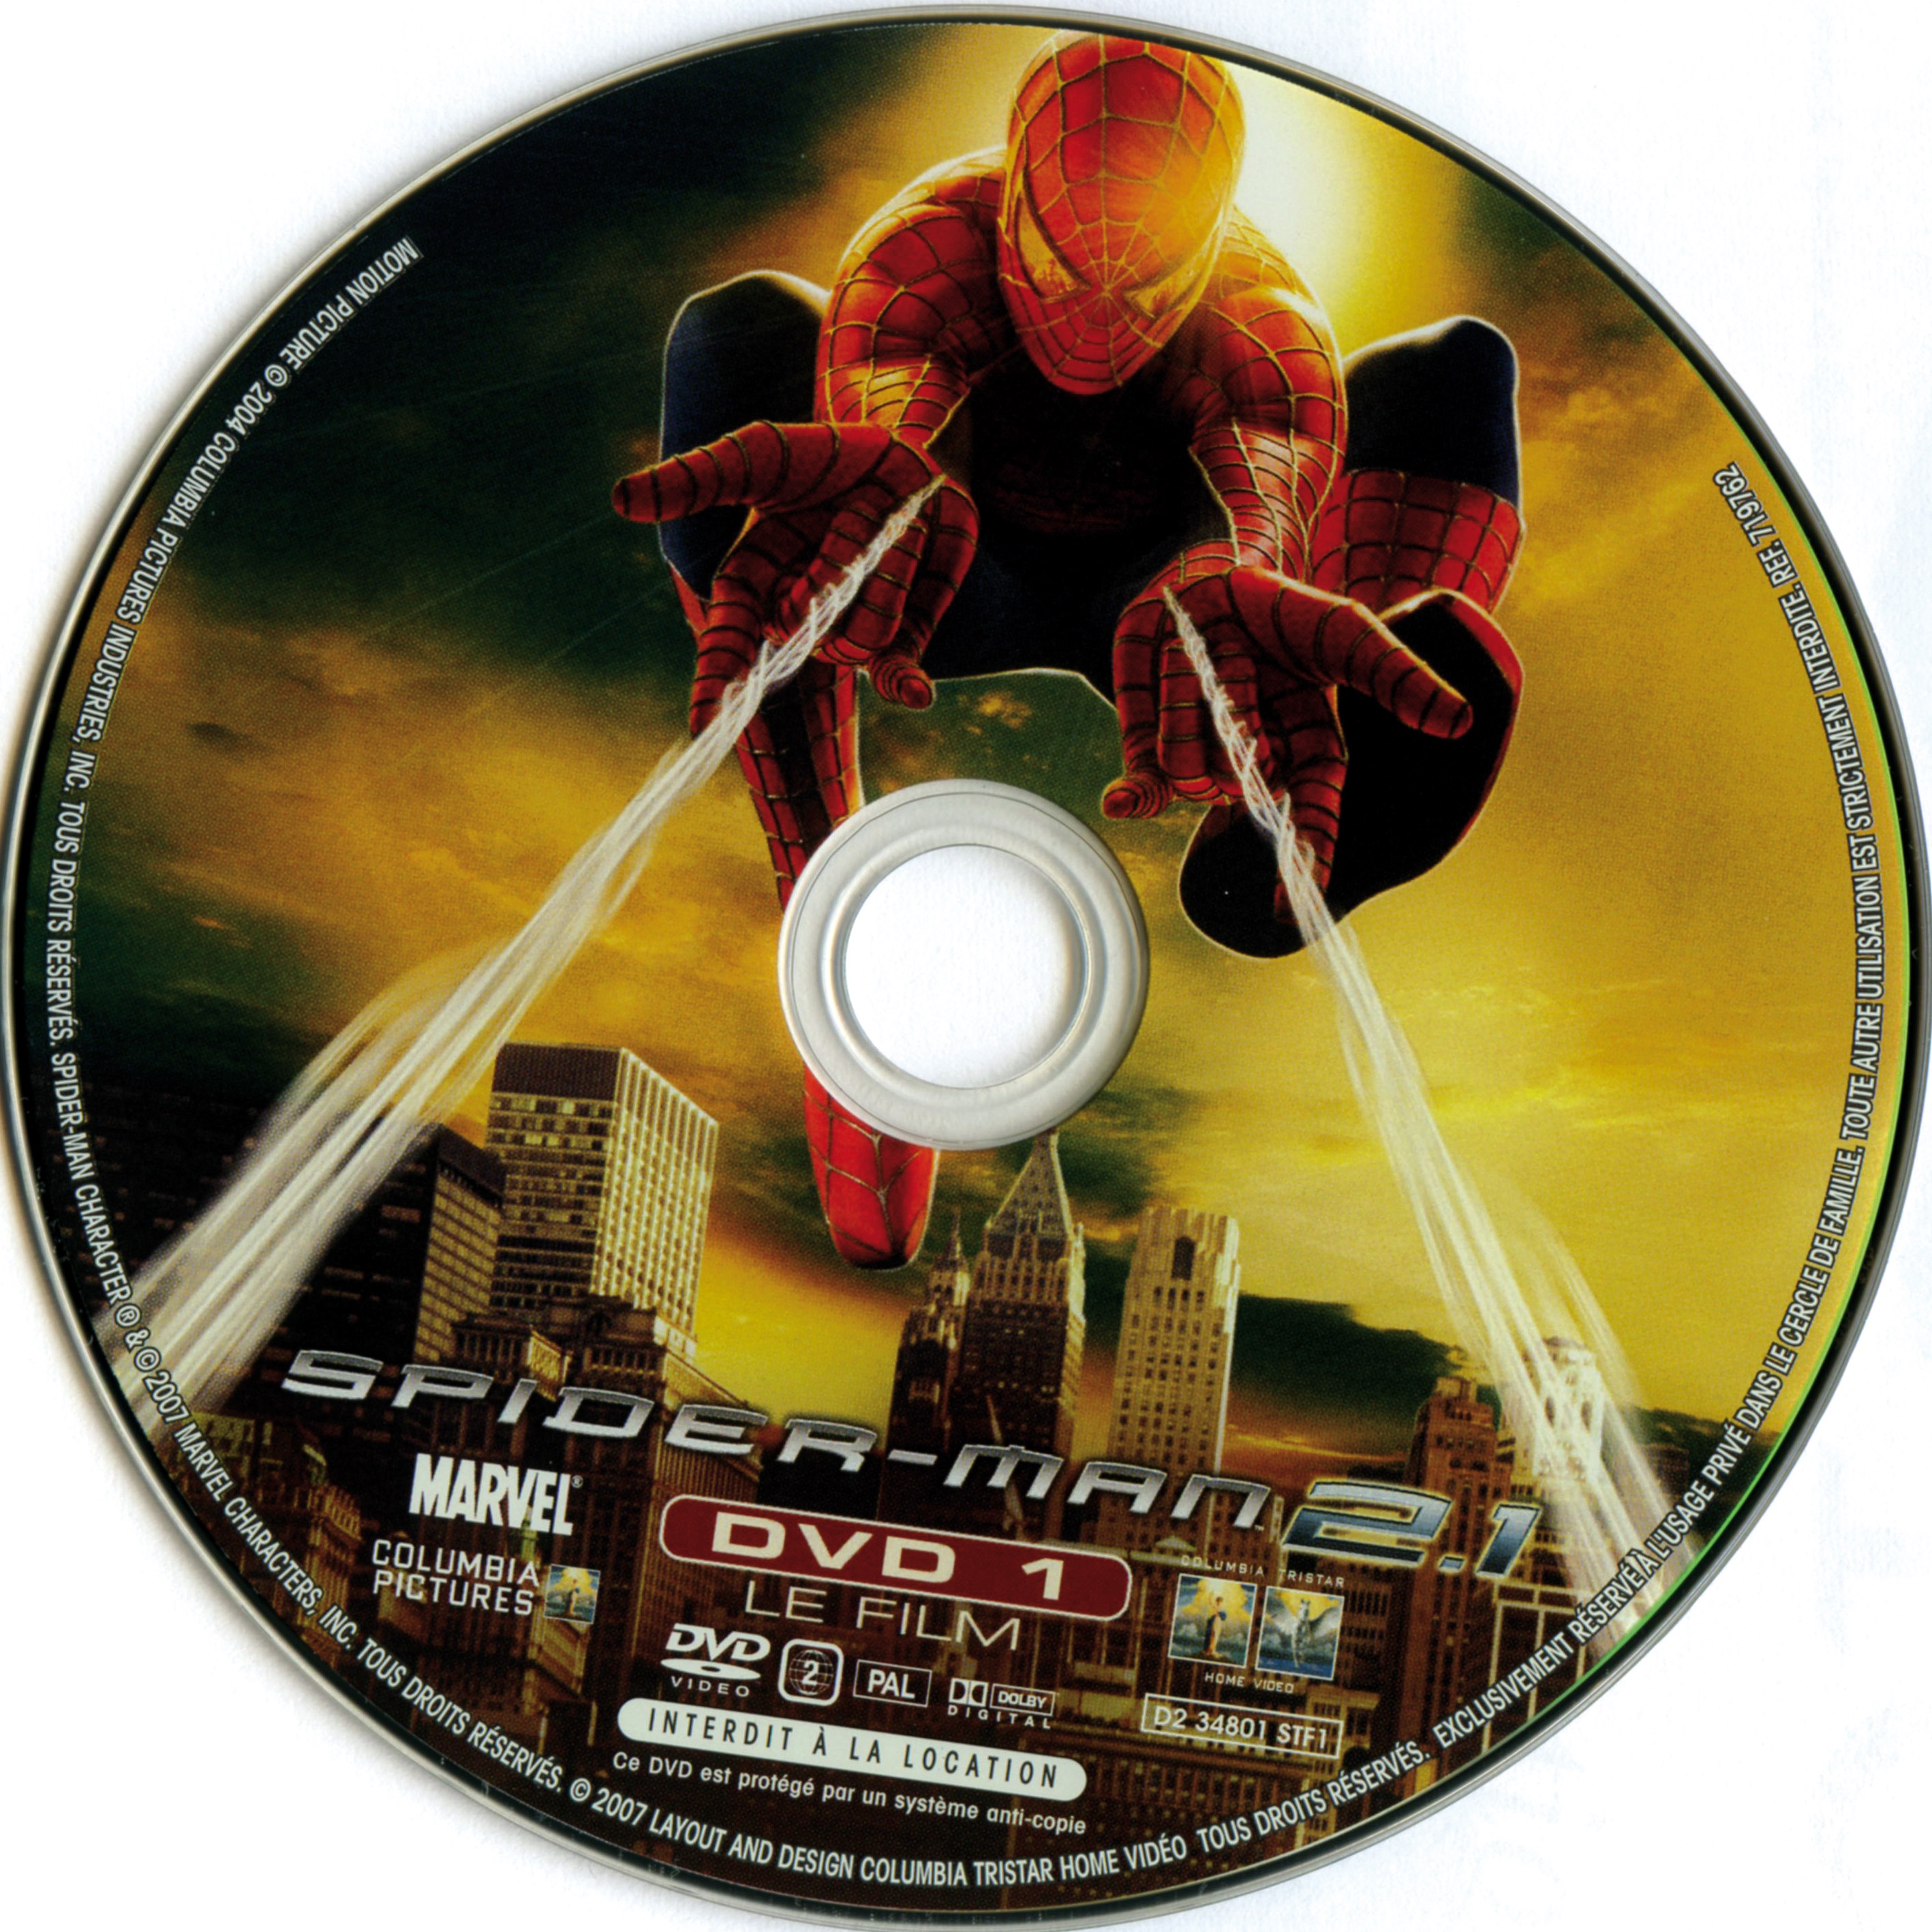 Spiderman 2.1 DISC 1